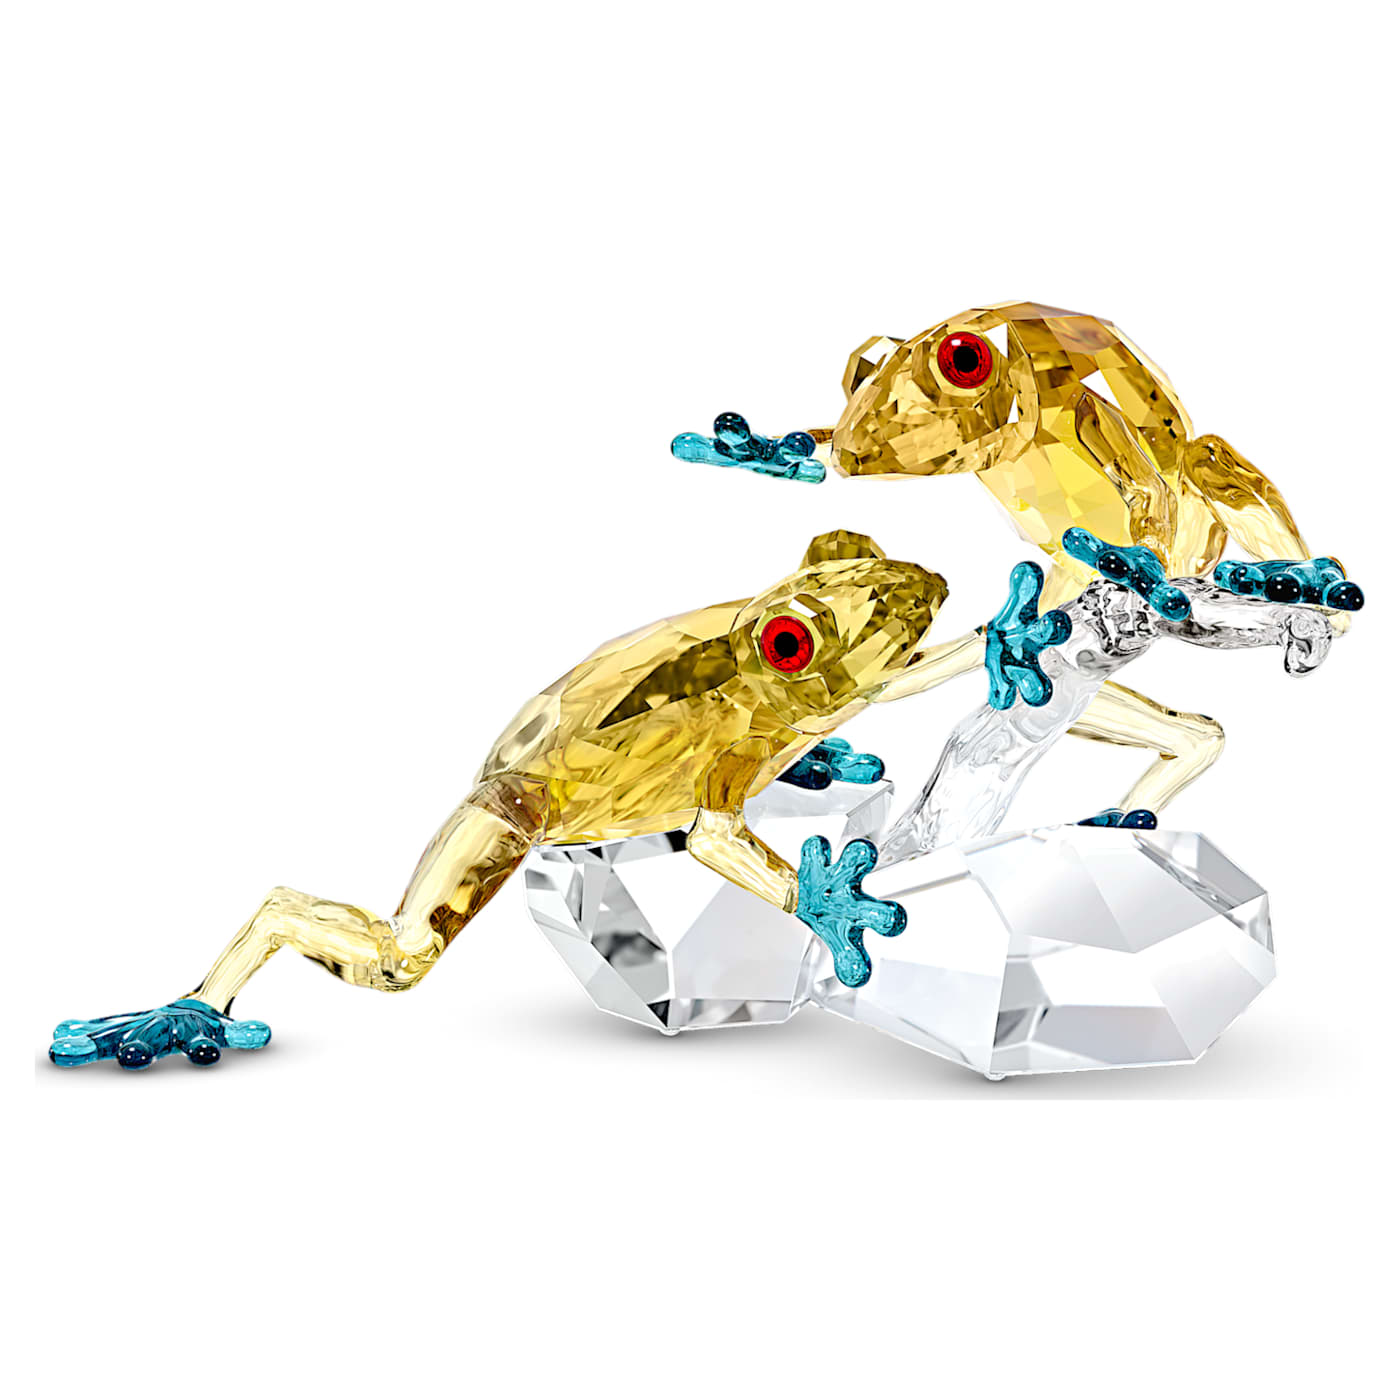 Swarovski Frog Prince Crystal Figurine